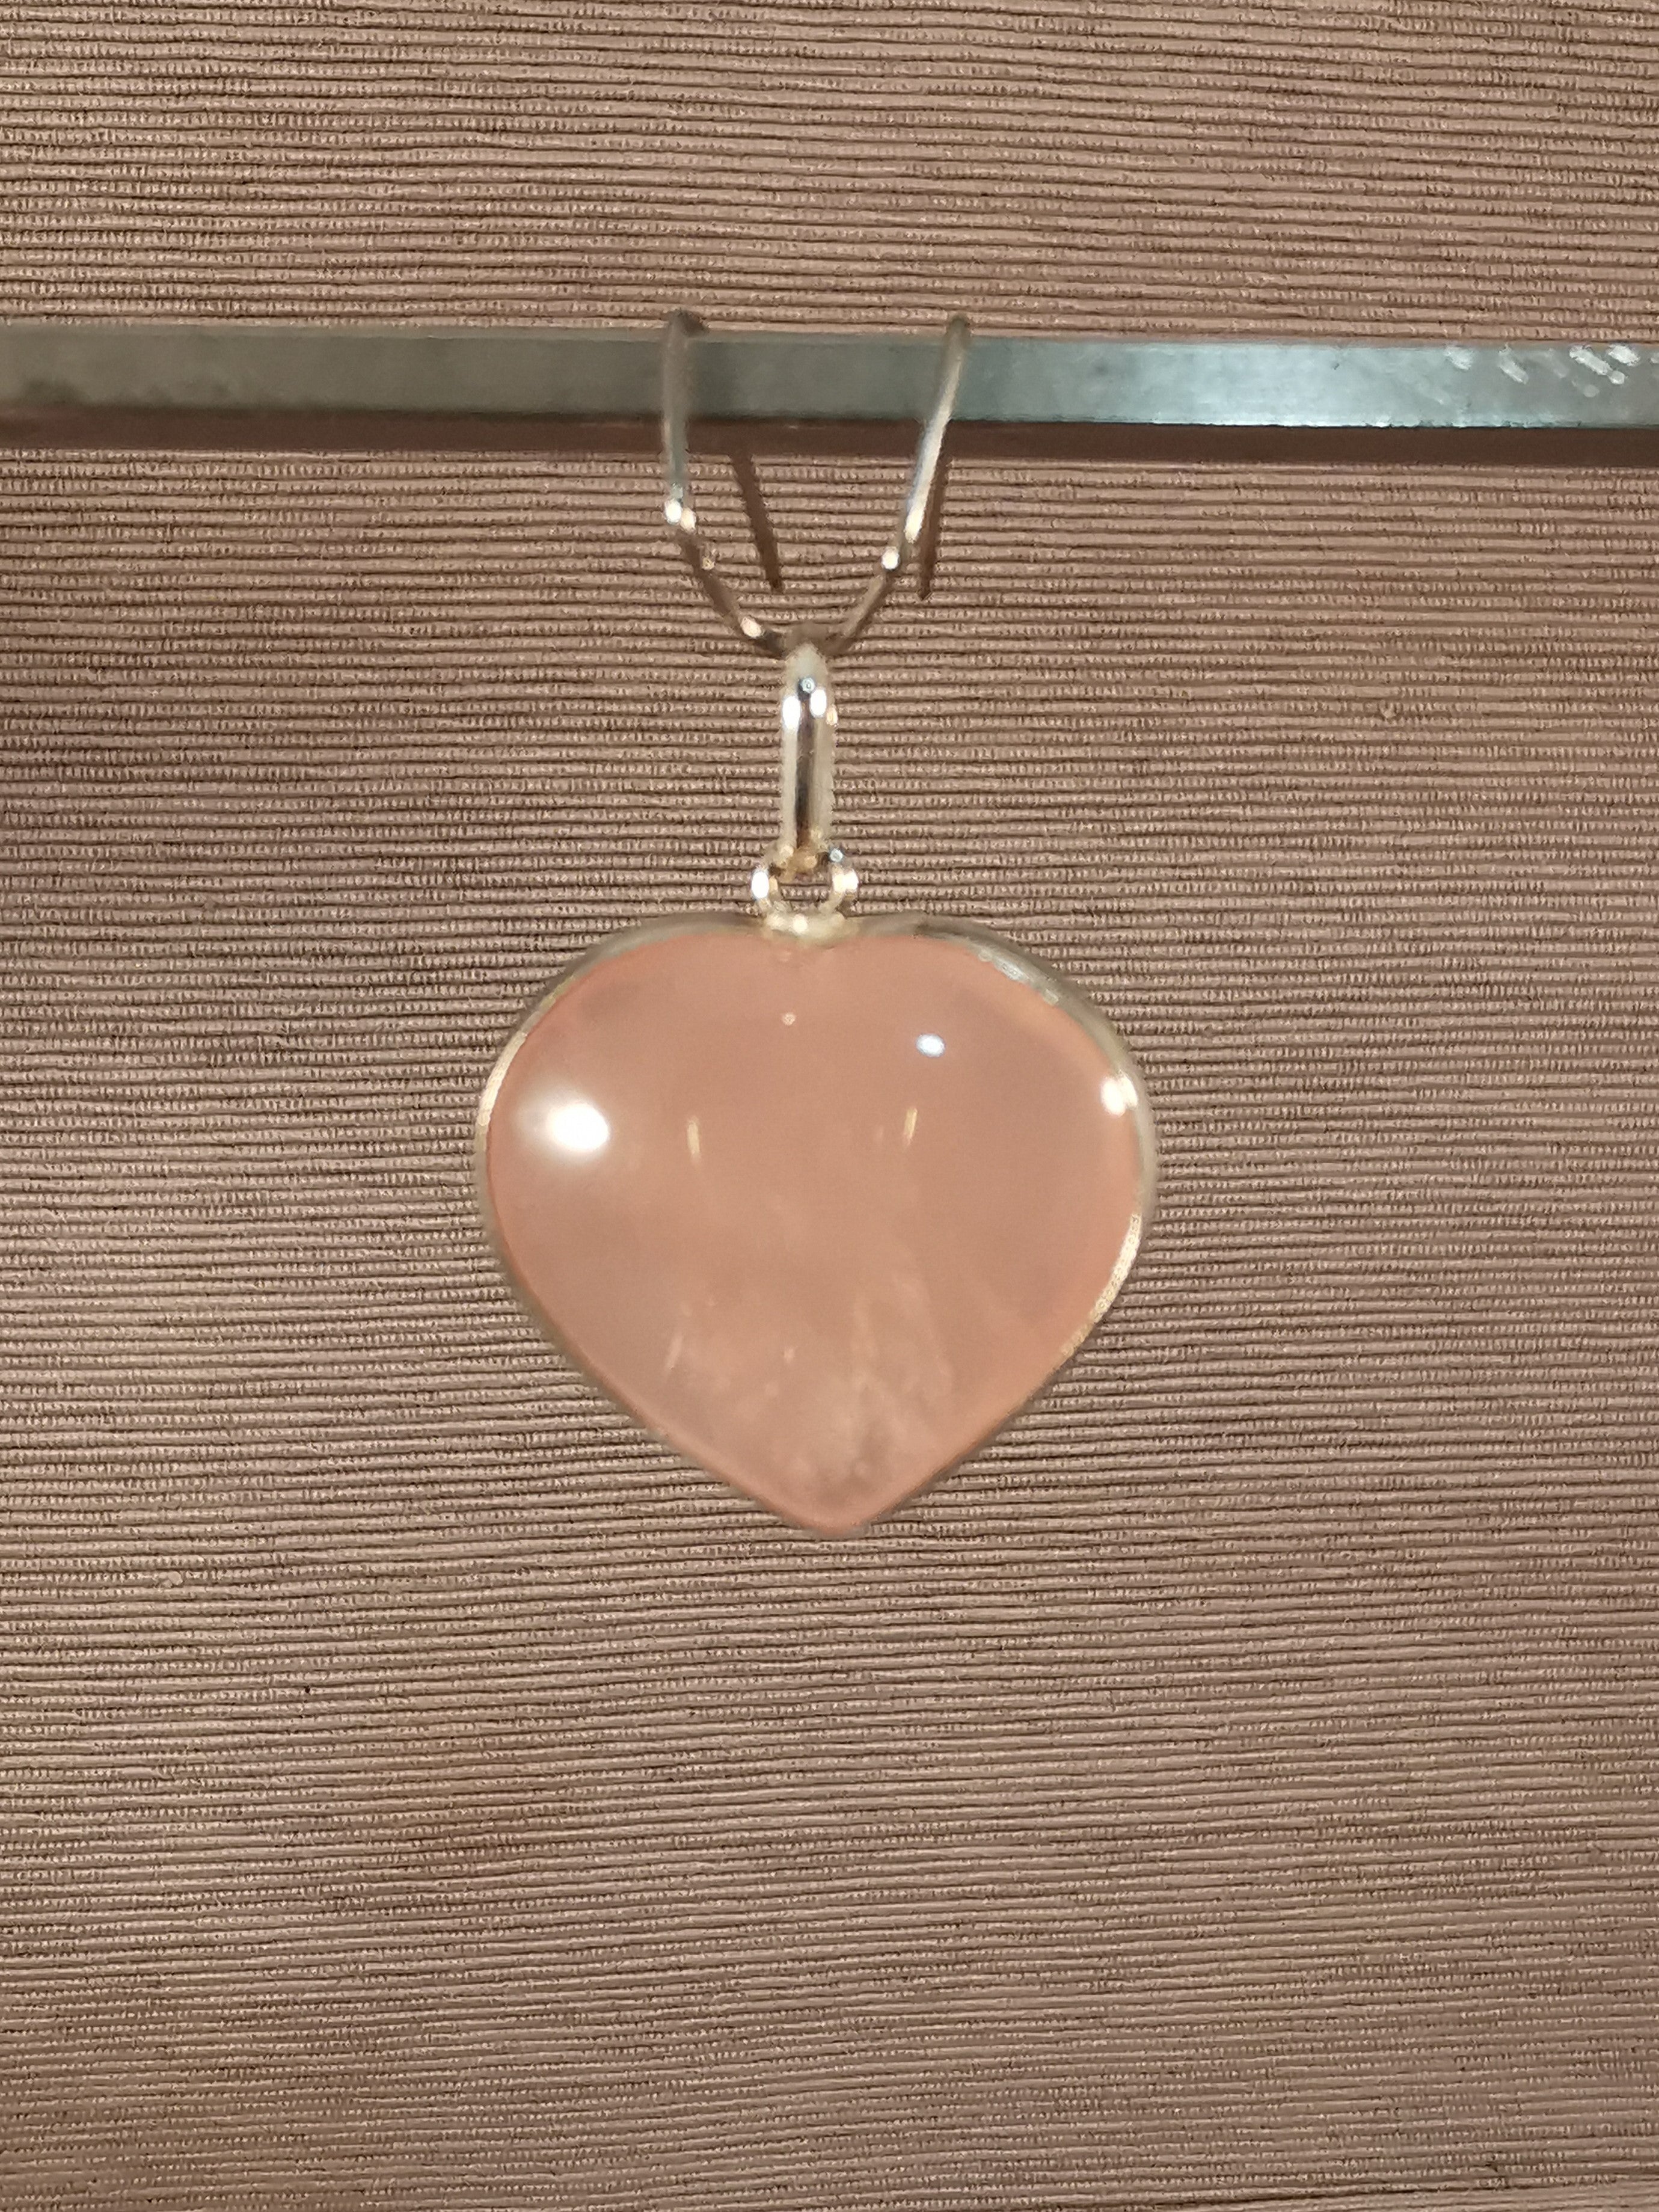 Rose Quartz Heart Pendant set in Sterling Silver